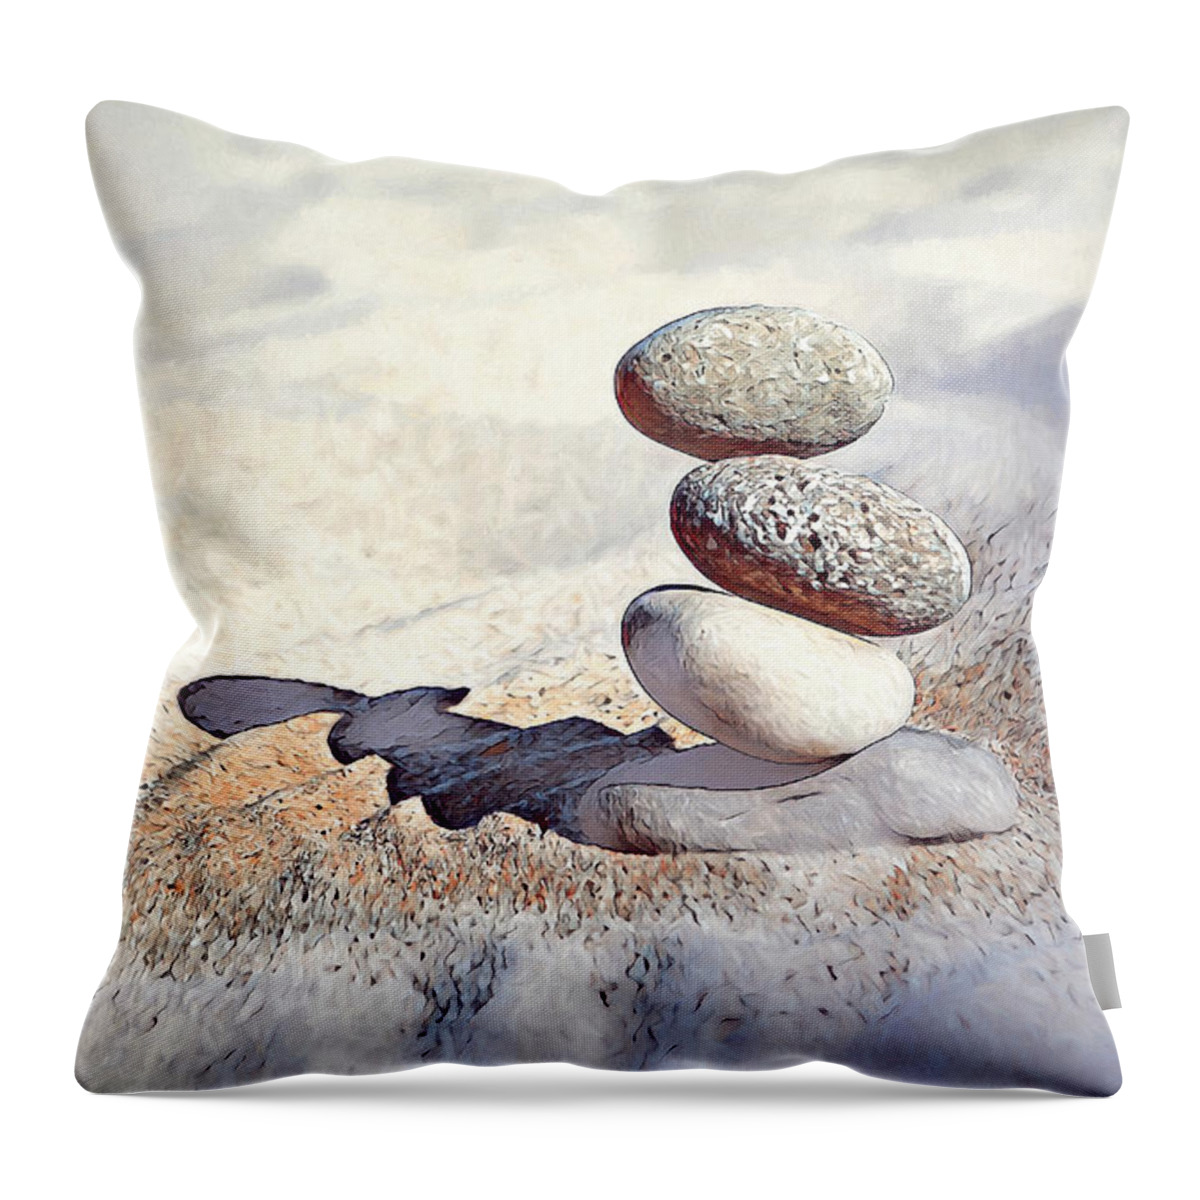 Stones Throw Pillow featuring the digital art Balance by Pennie McCracken